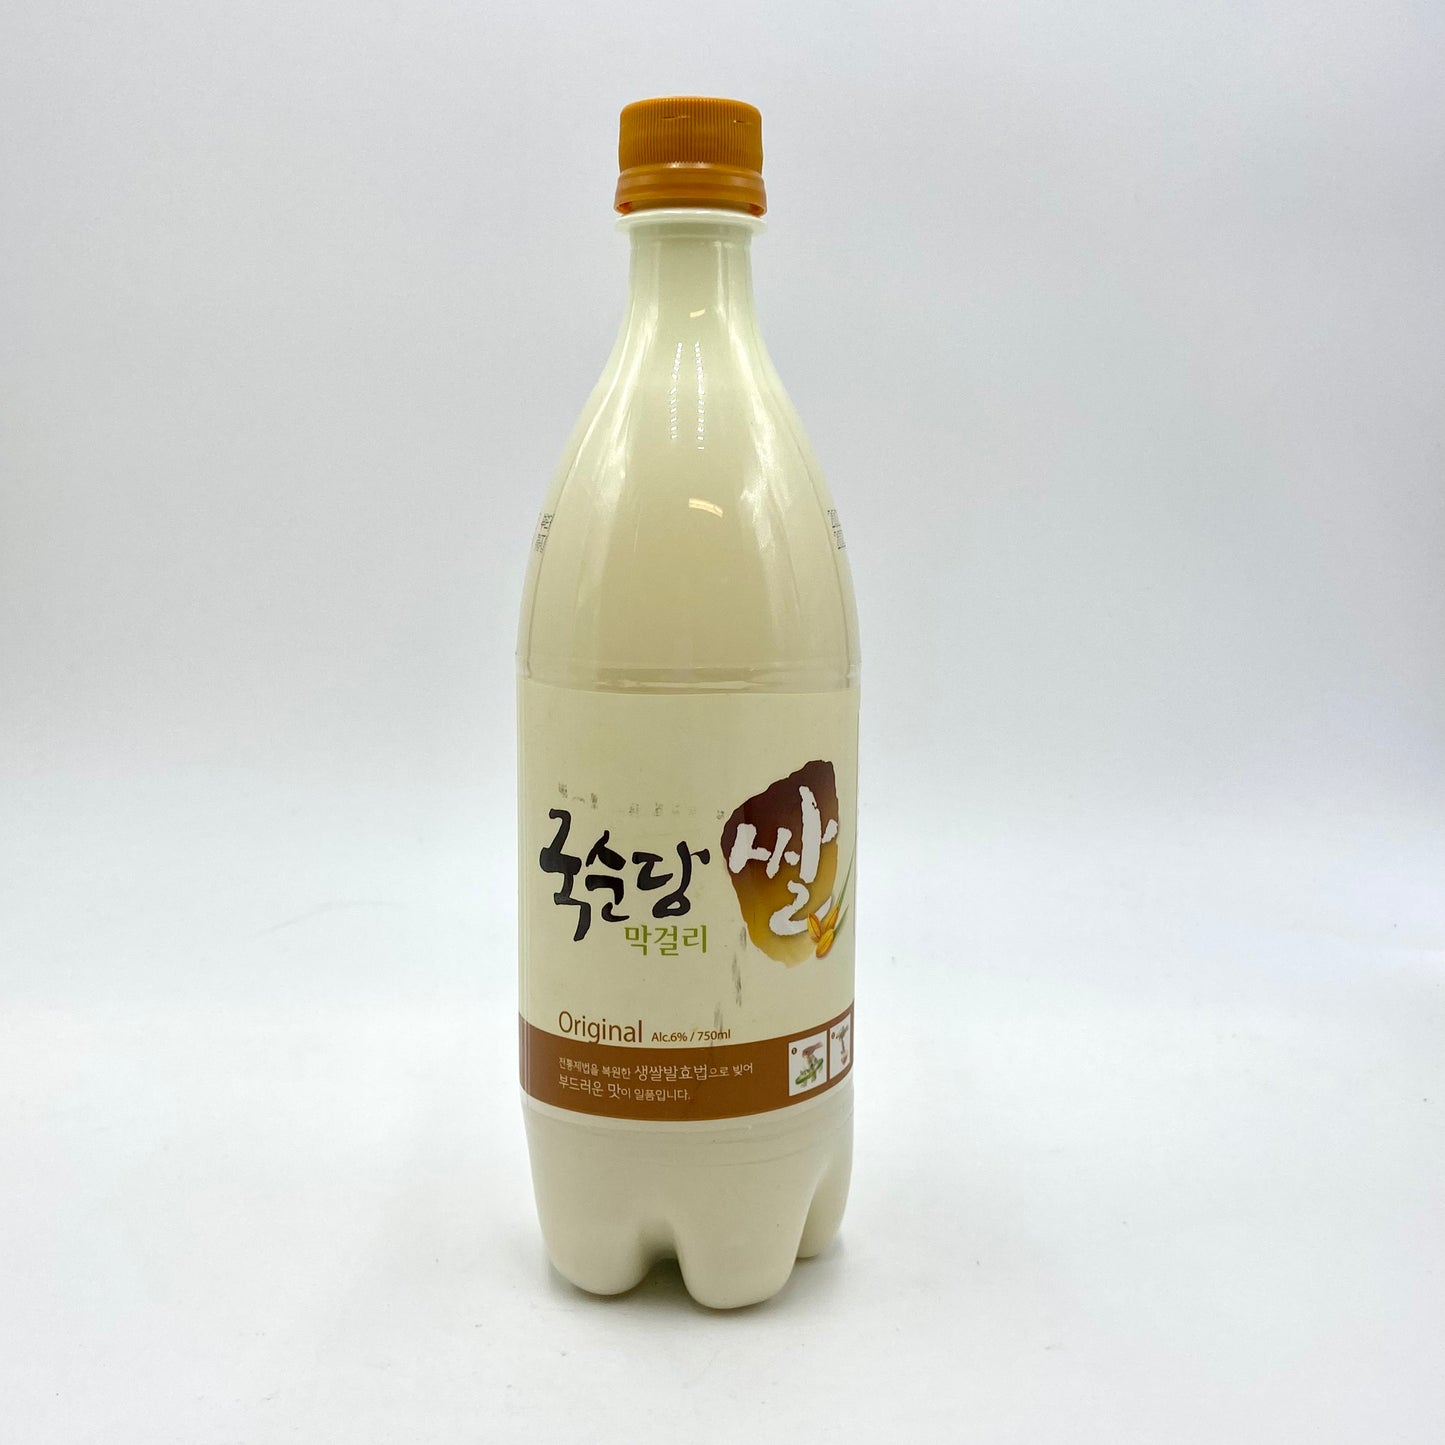 Kooksoondang Rice Makgeolli Alc 6% 750ml 韩国麴醇堂米酒